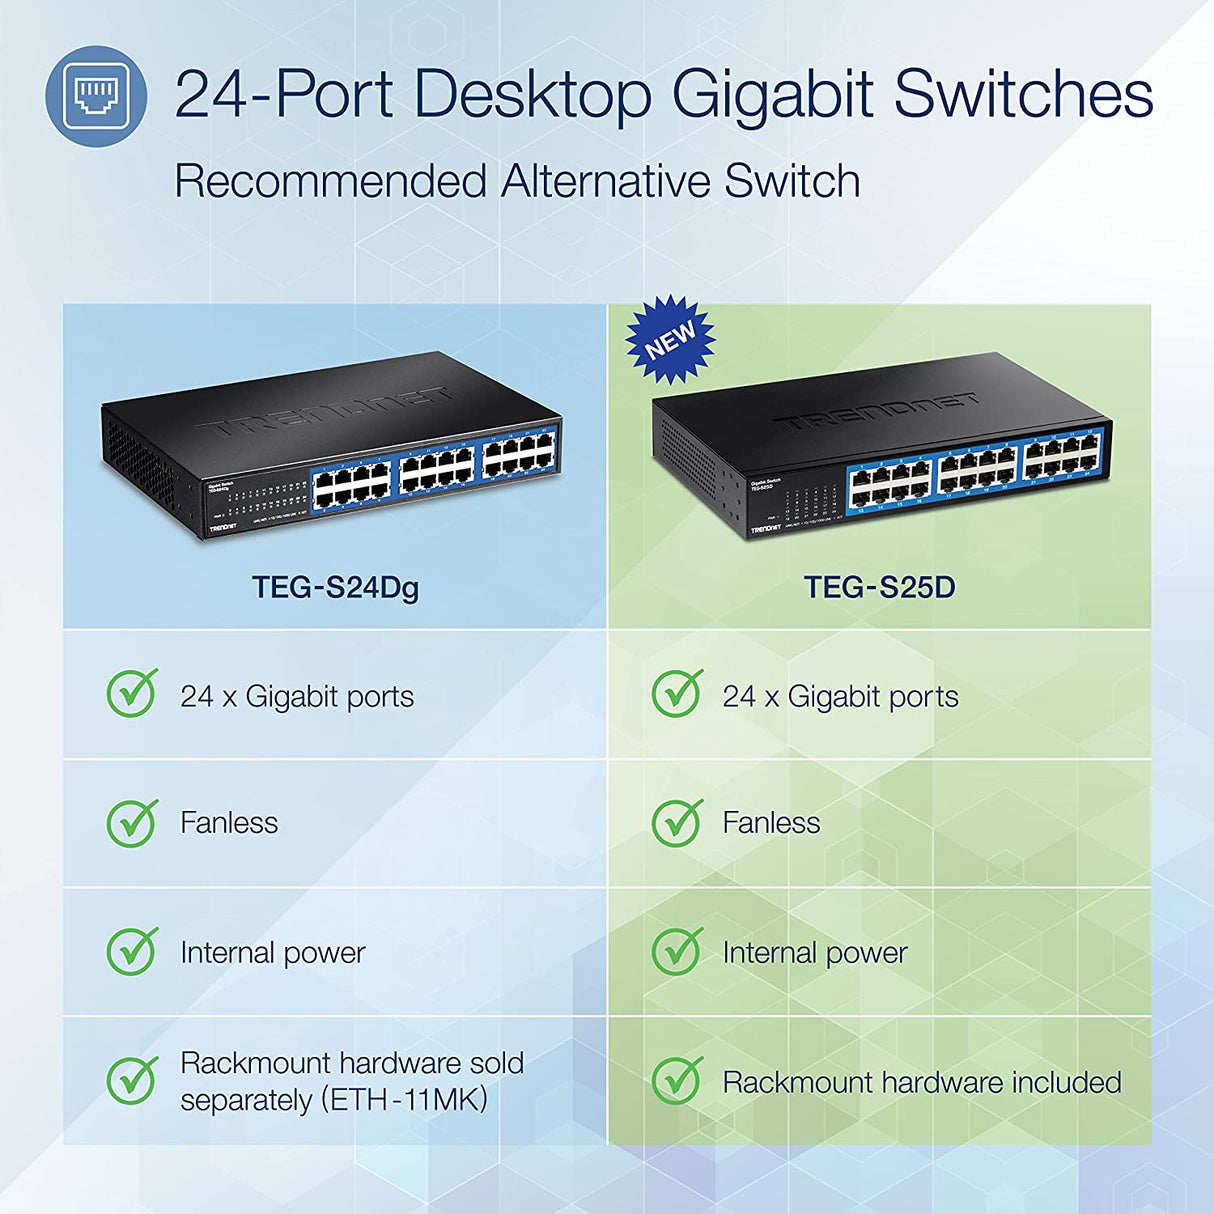 TRENDnet 24-Port Gigabit Desktop Switch, TEG-S25D, 24 x Gigabit RJ-45 Ports, 48Gbps Switching Capacity, Fanless Design, Metal Enclosure, Internal Power Supply, Lifetime Protection, Black